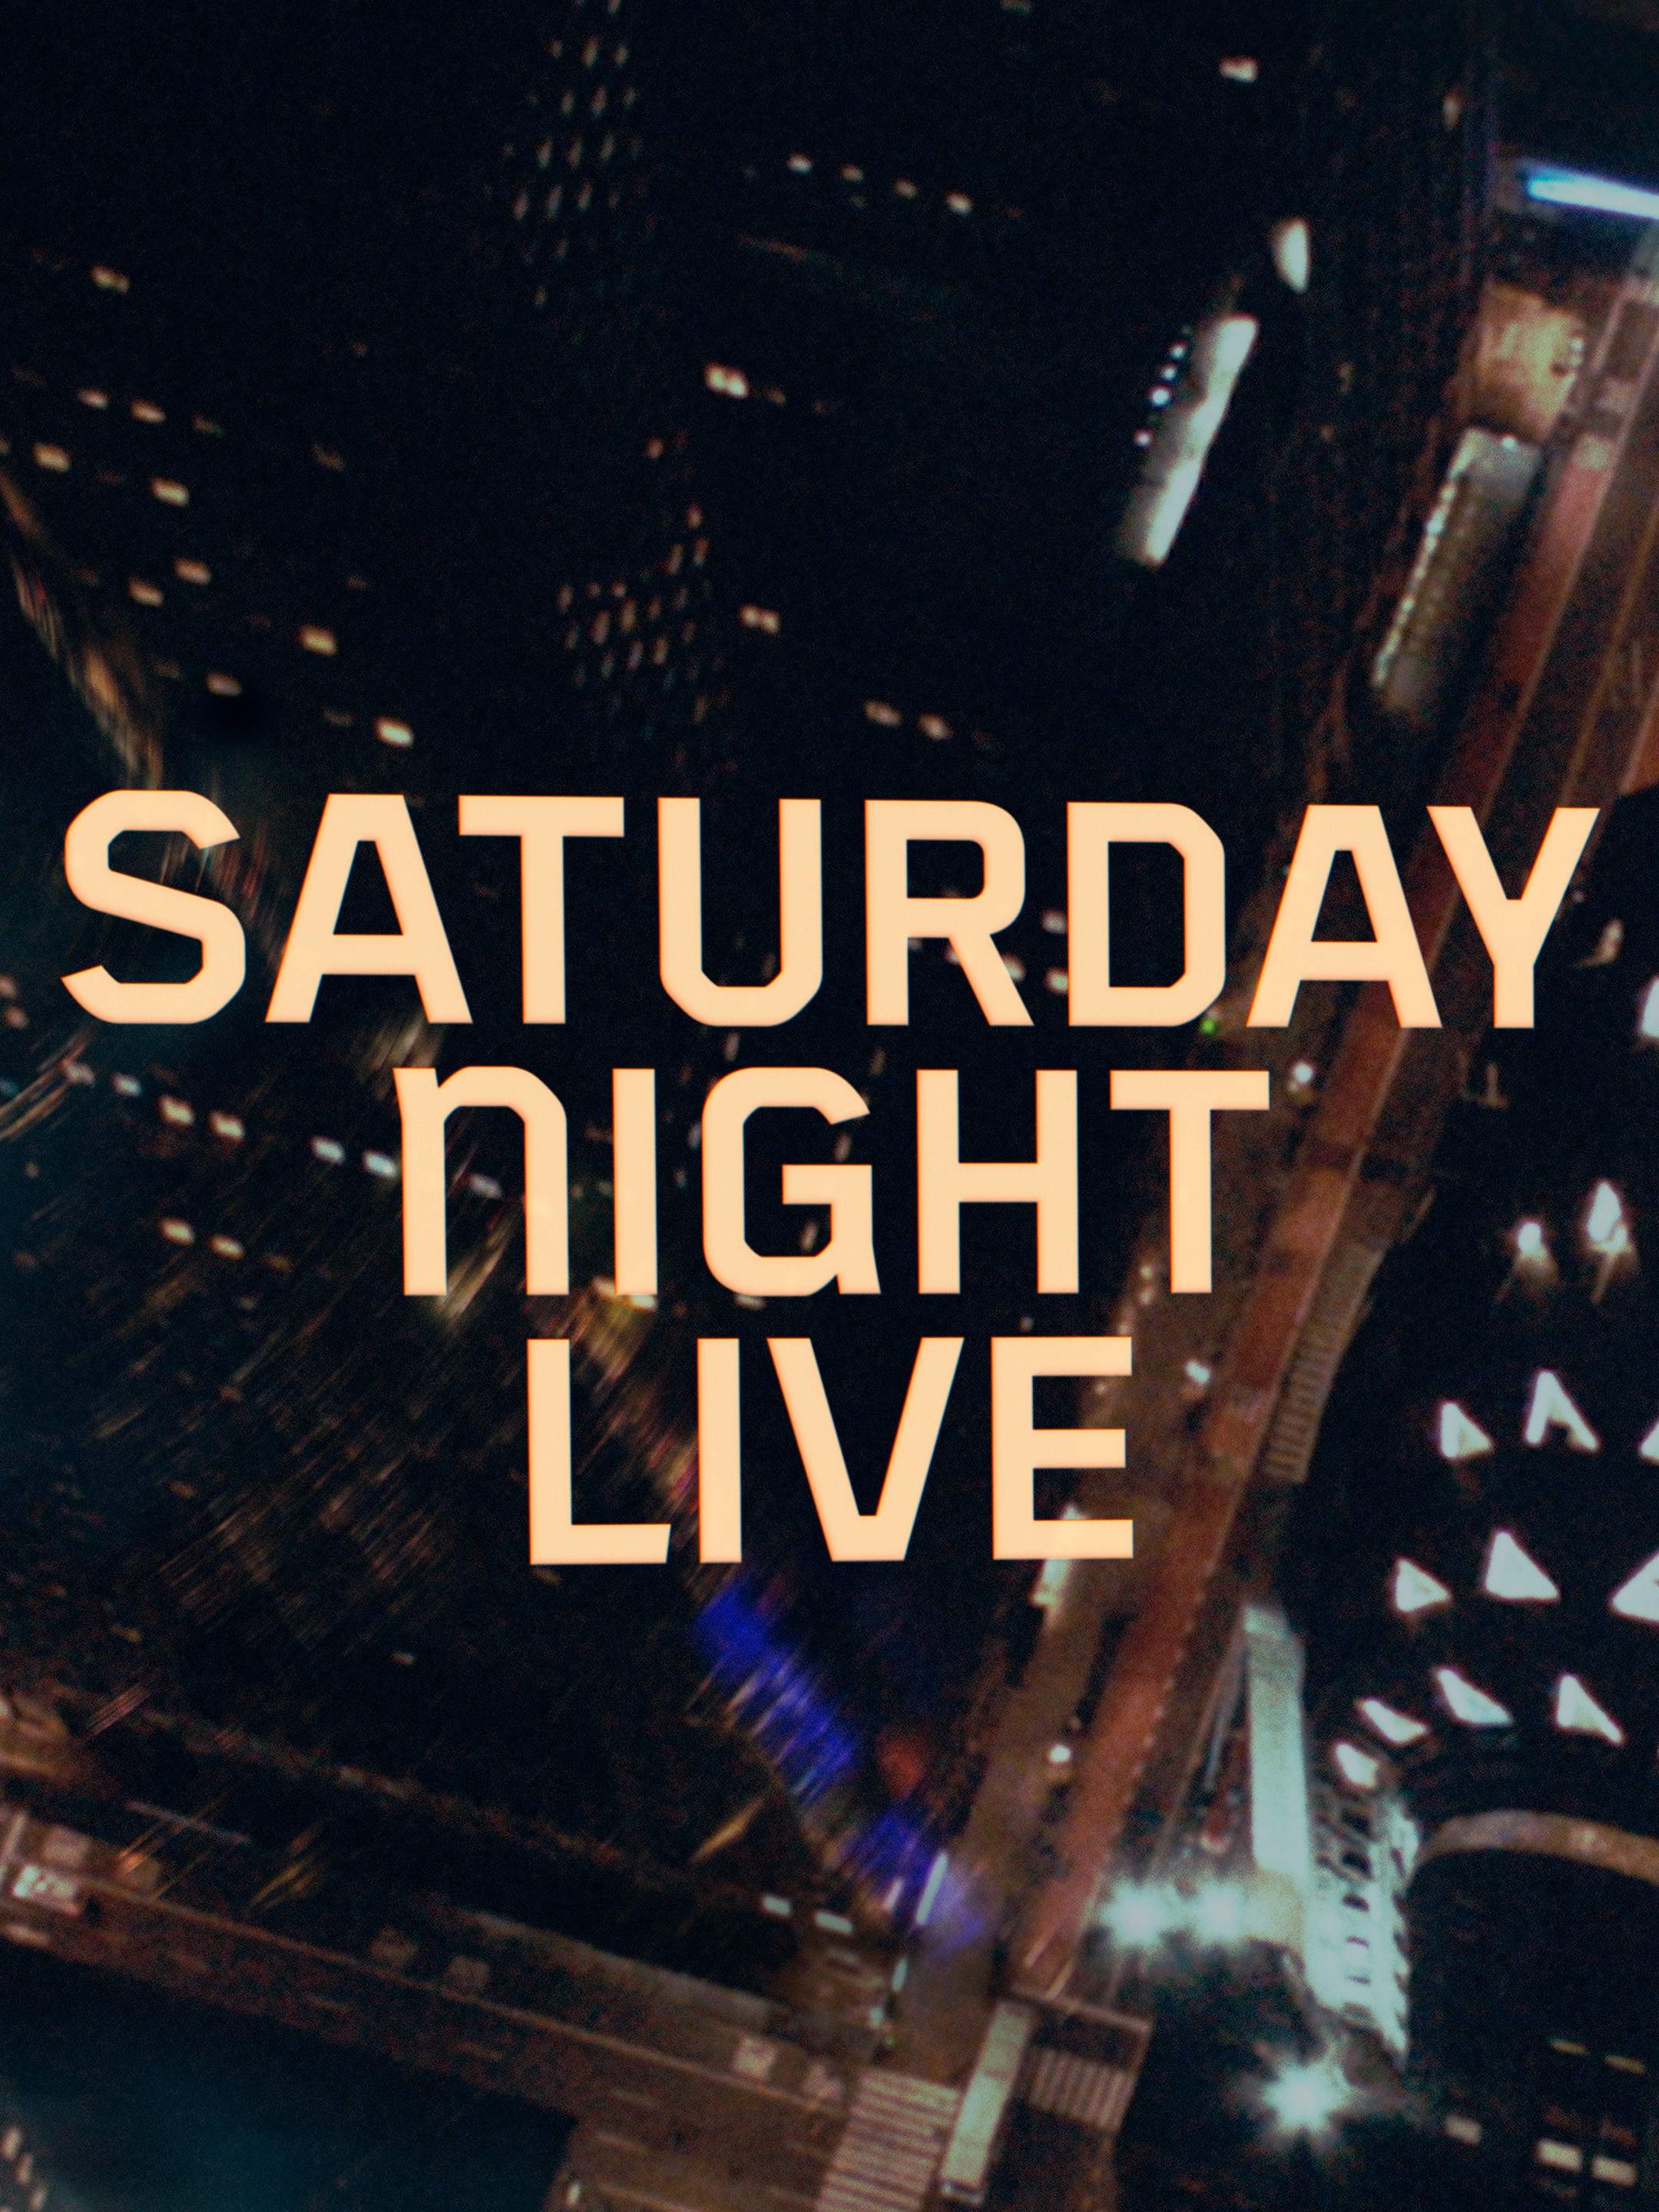 Saturday night live season 42 episode 18 watch online free